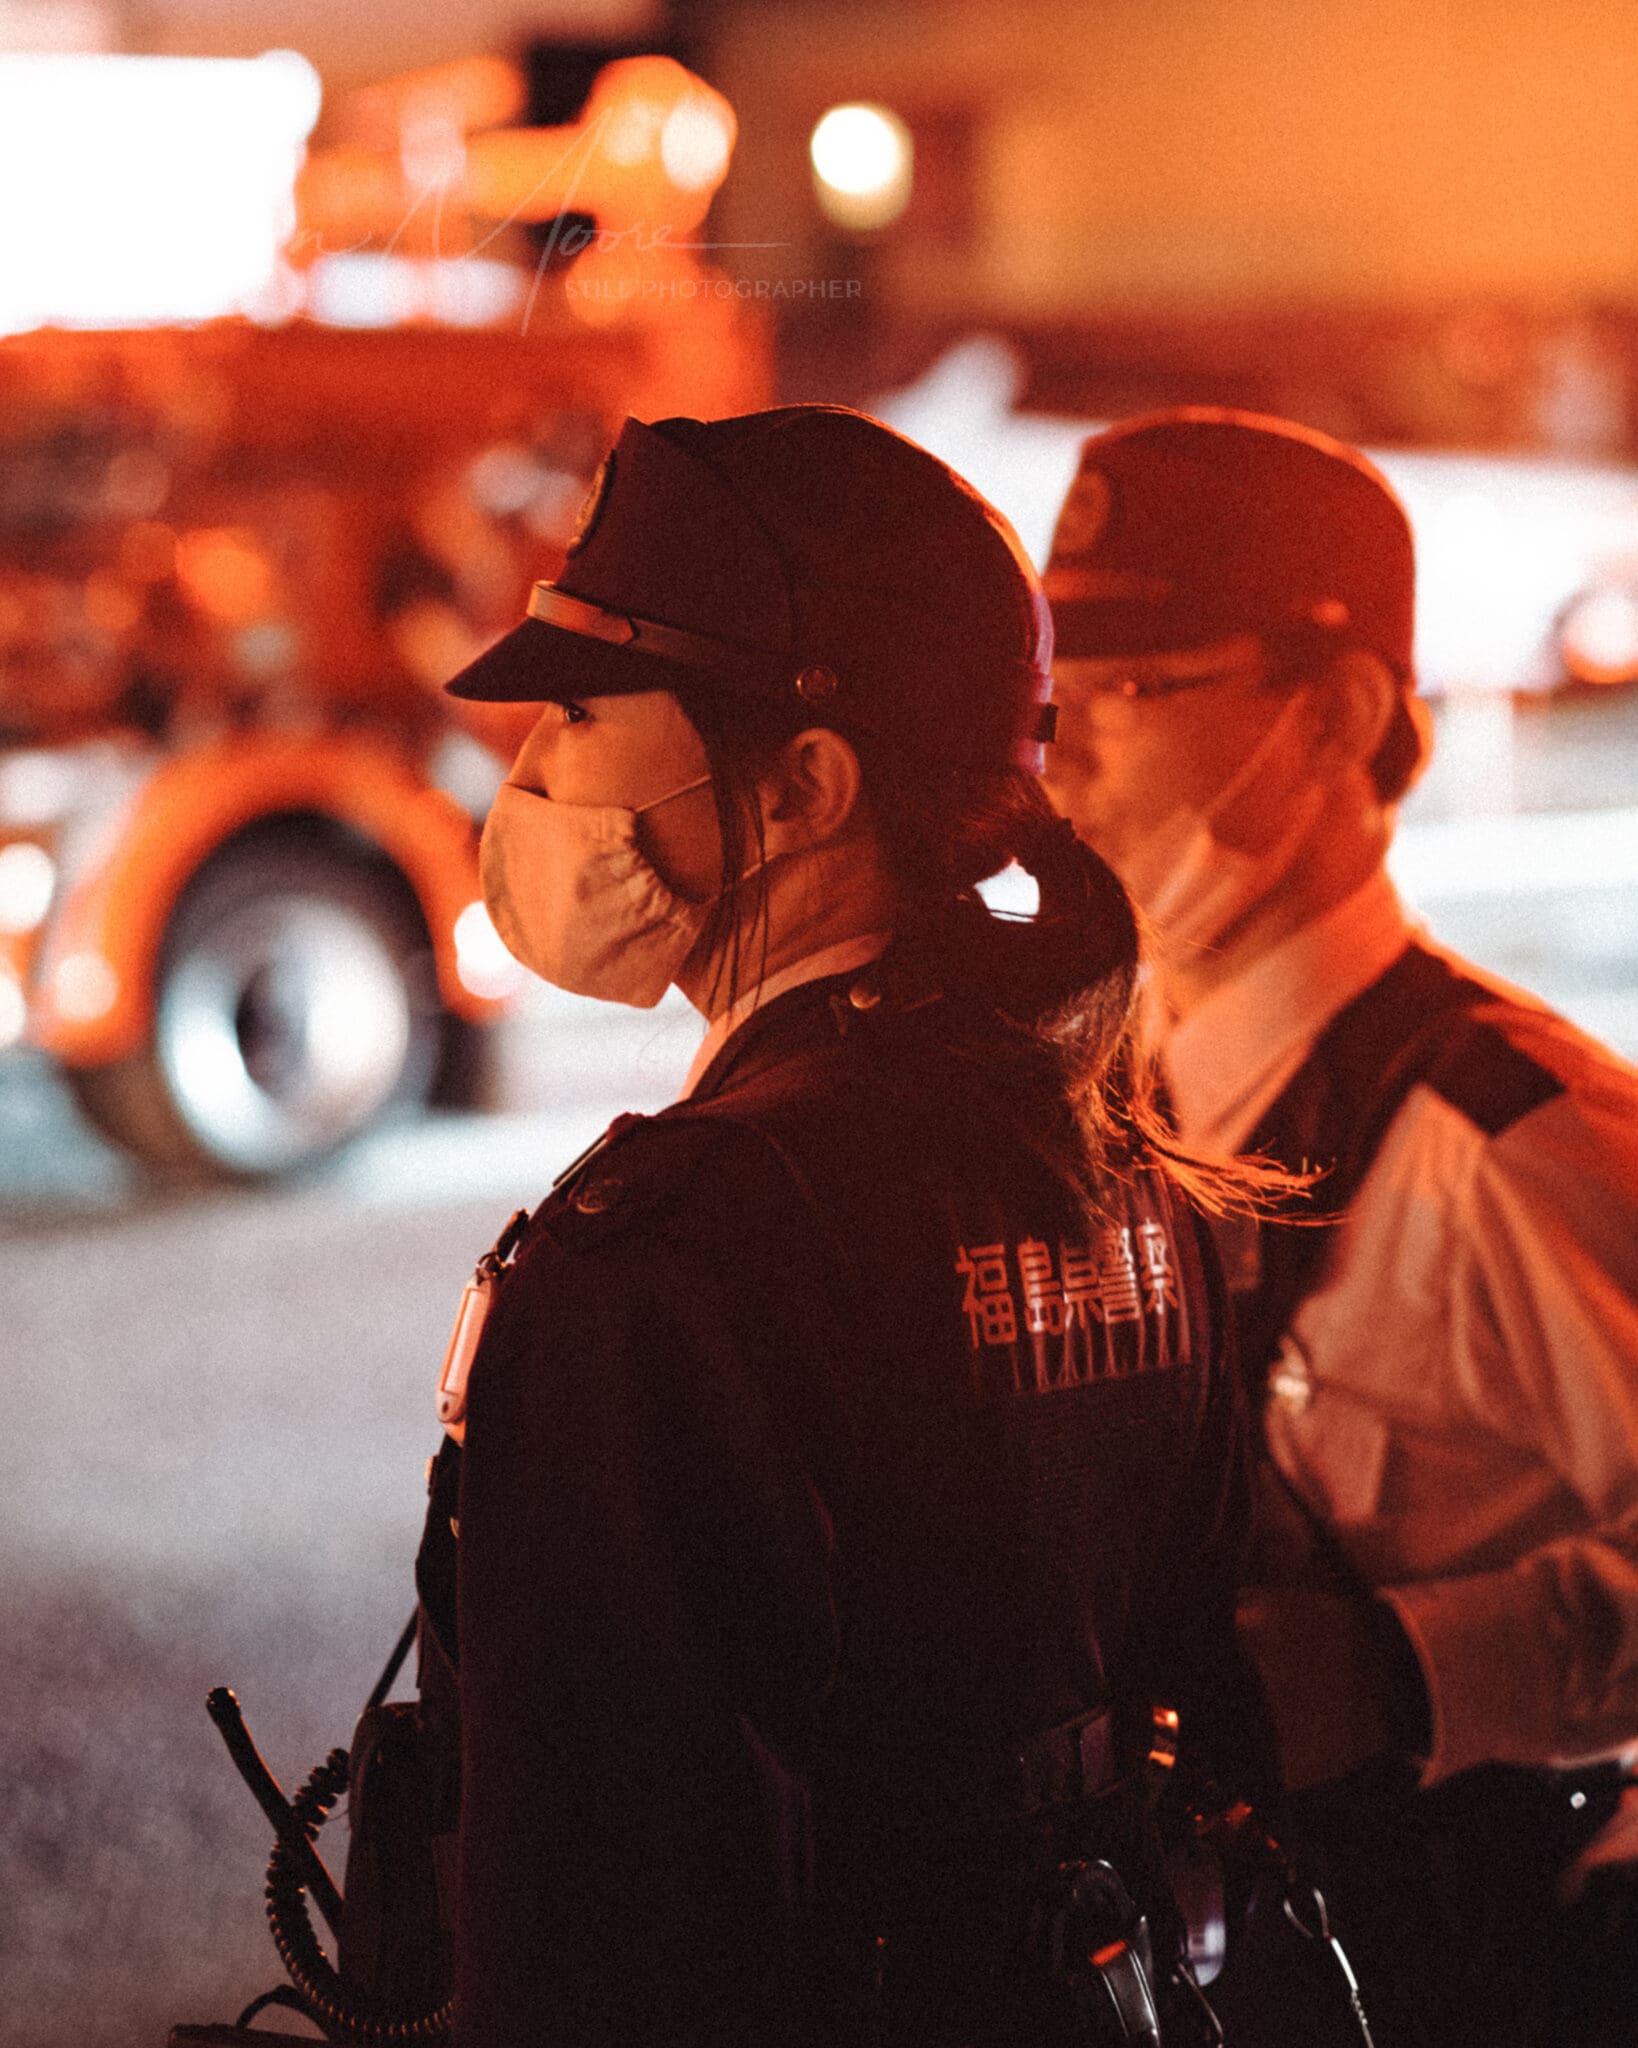 Female police officer on night duty at multi-agency emergency response scene.